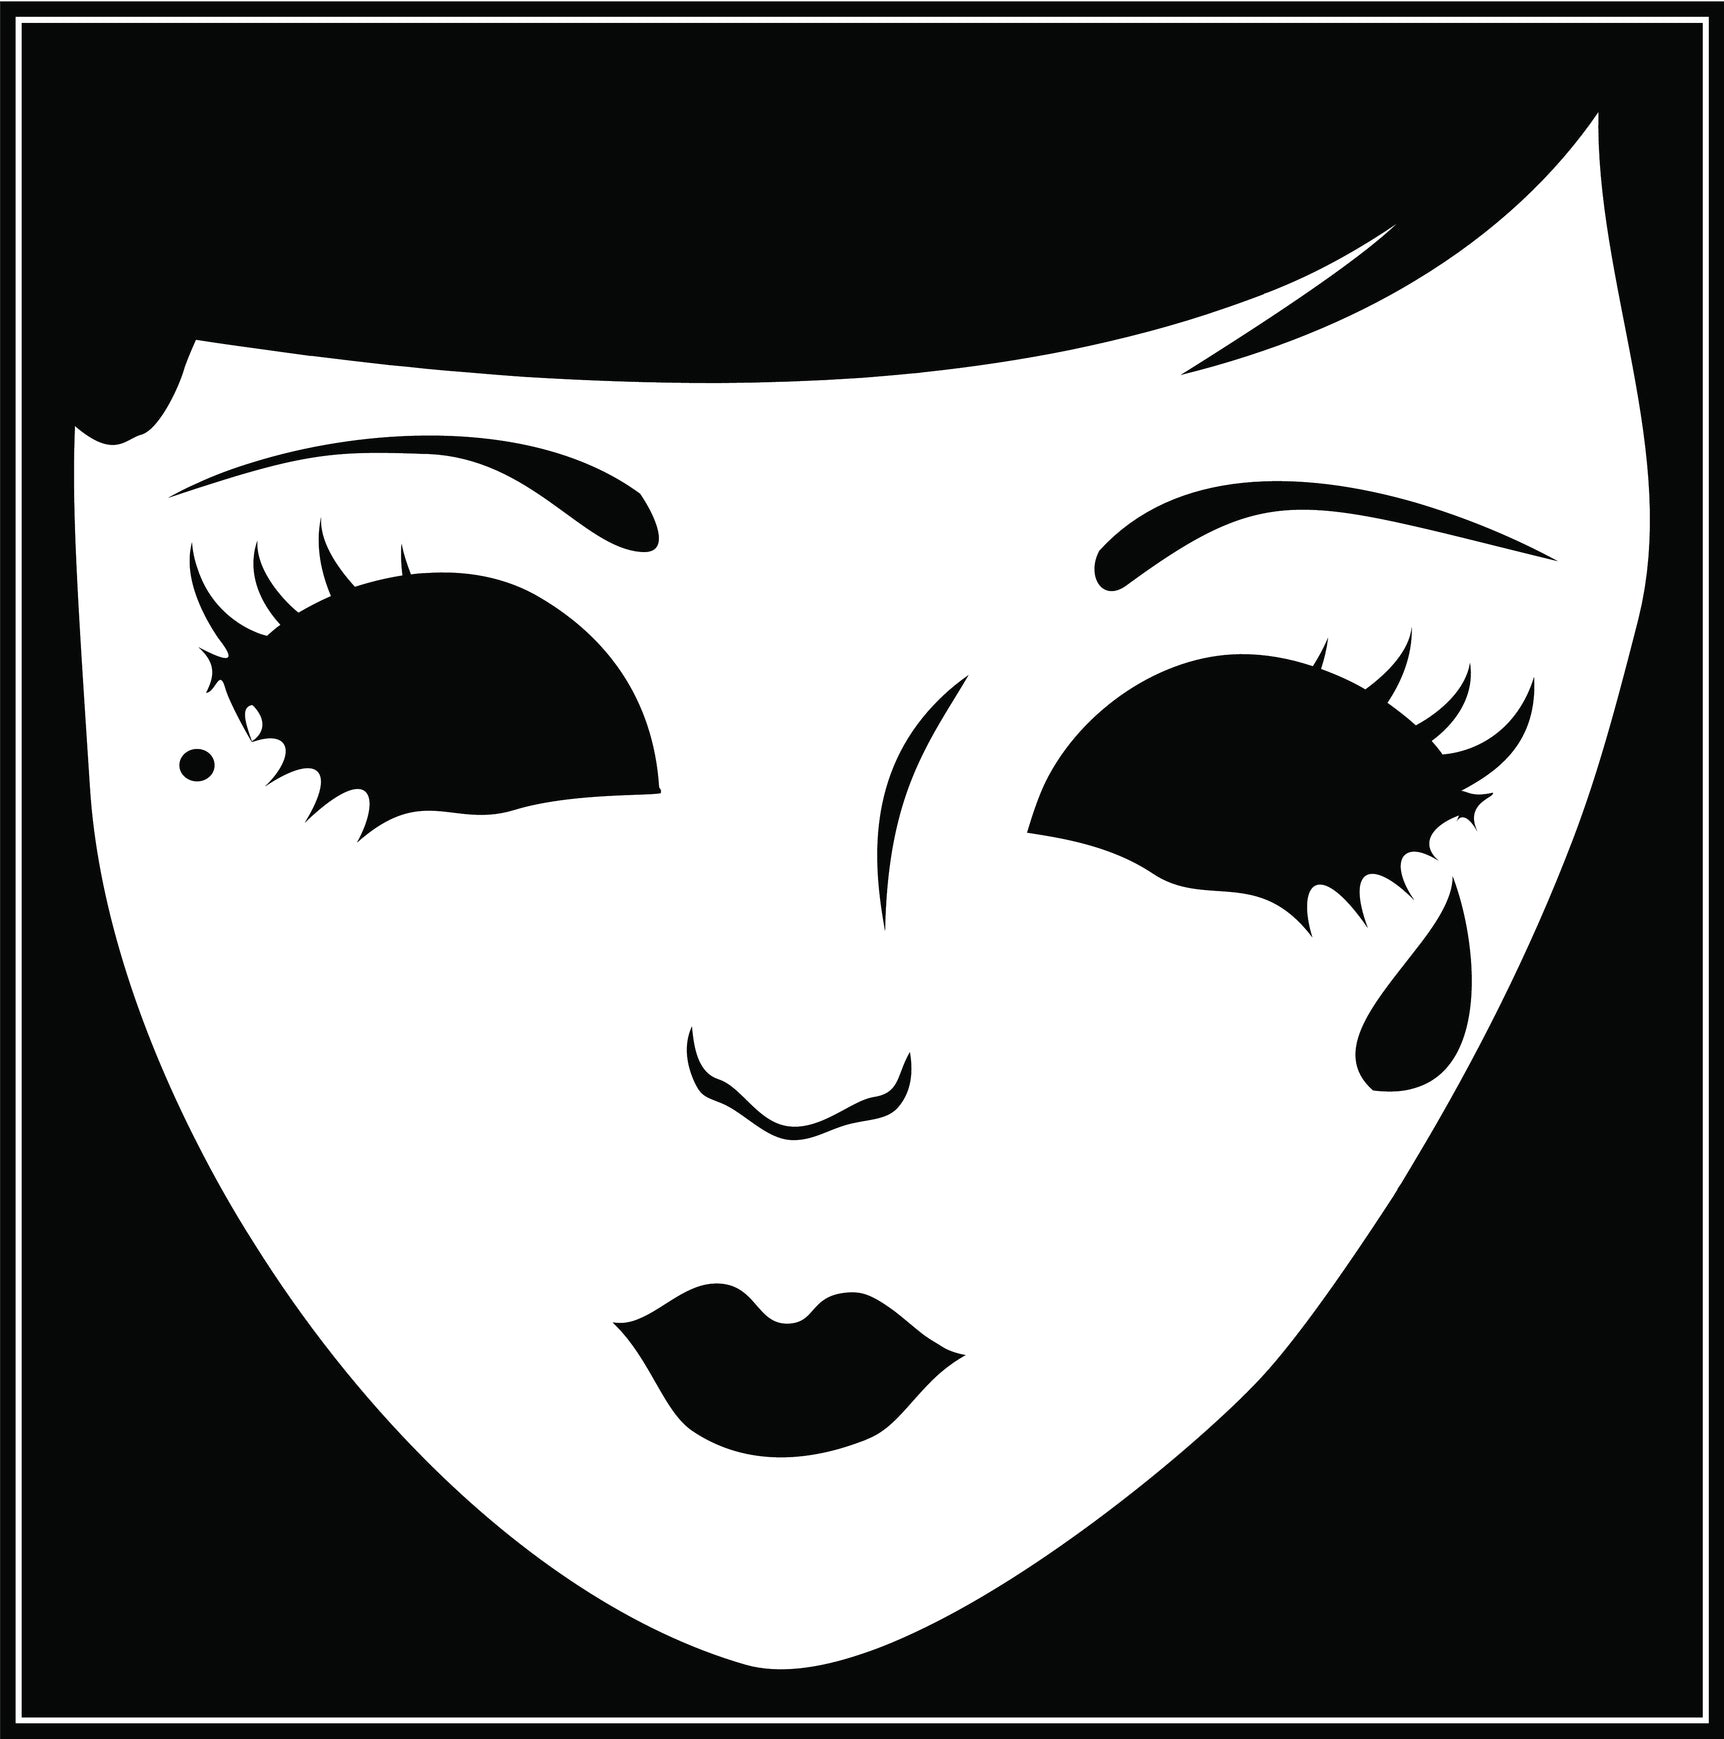 Creepy Emo Punk Demon Girl Face with Black Eyes Border Around Image As Shown Vinyl Decal Sticker